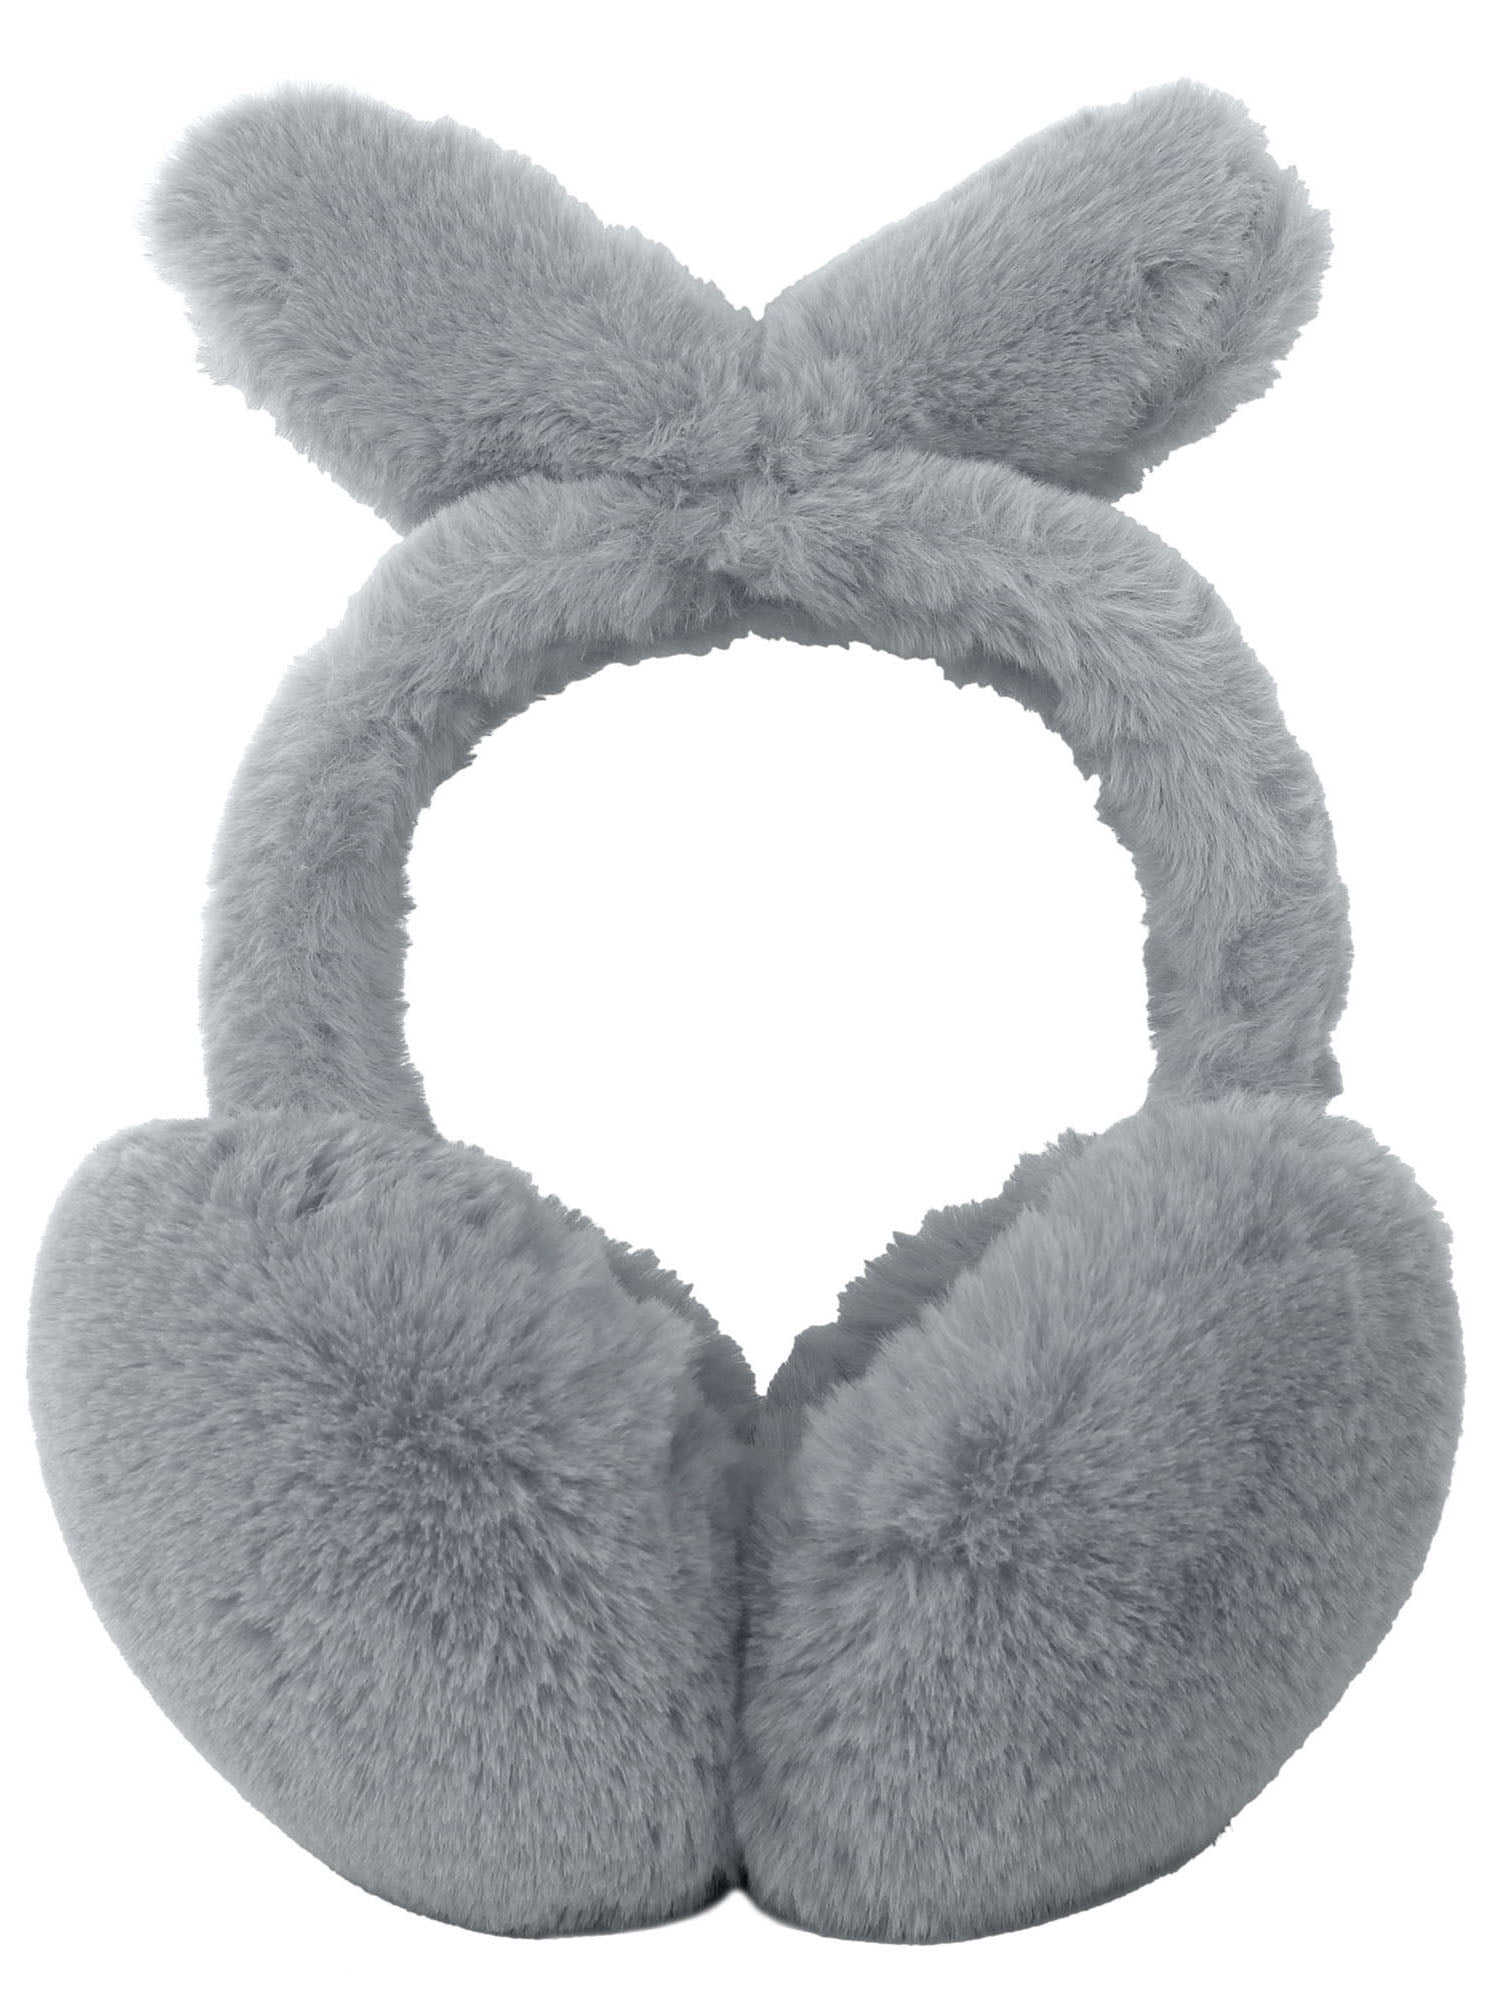 Kids Earmuff Warm Soft Winter Foldable Plush Rabbit Ear Warmers Ear Muffs 